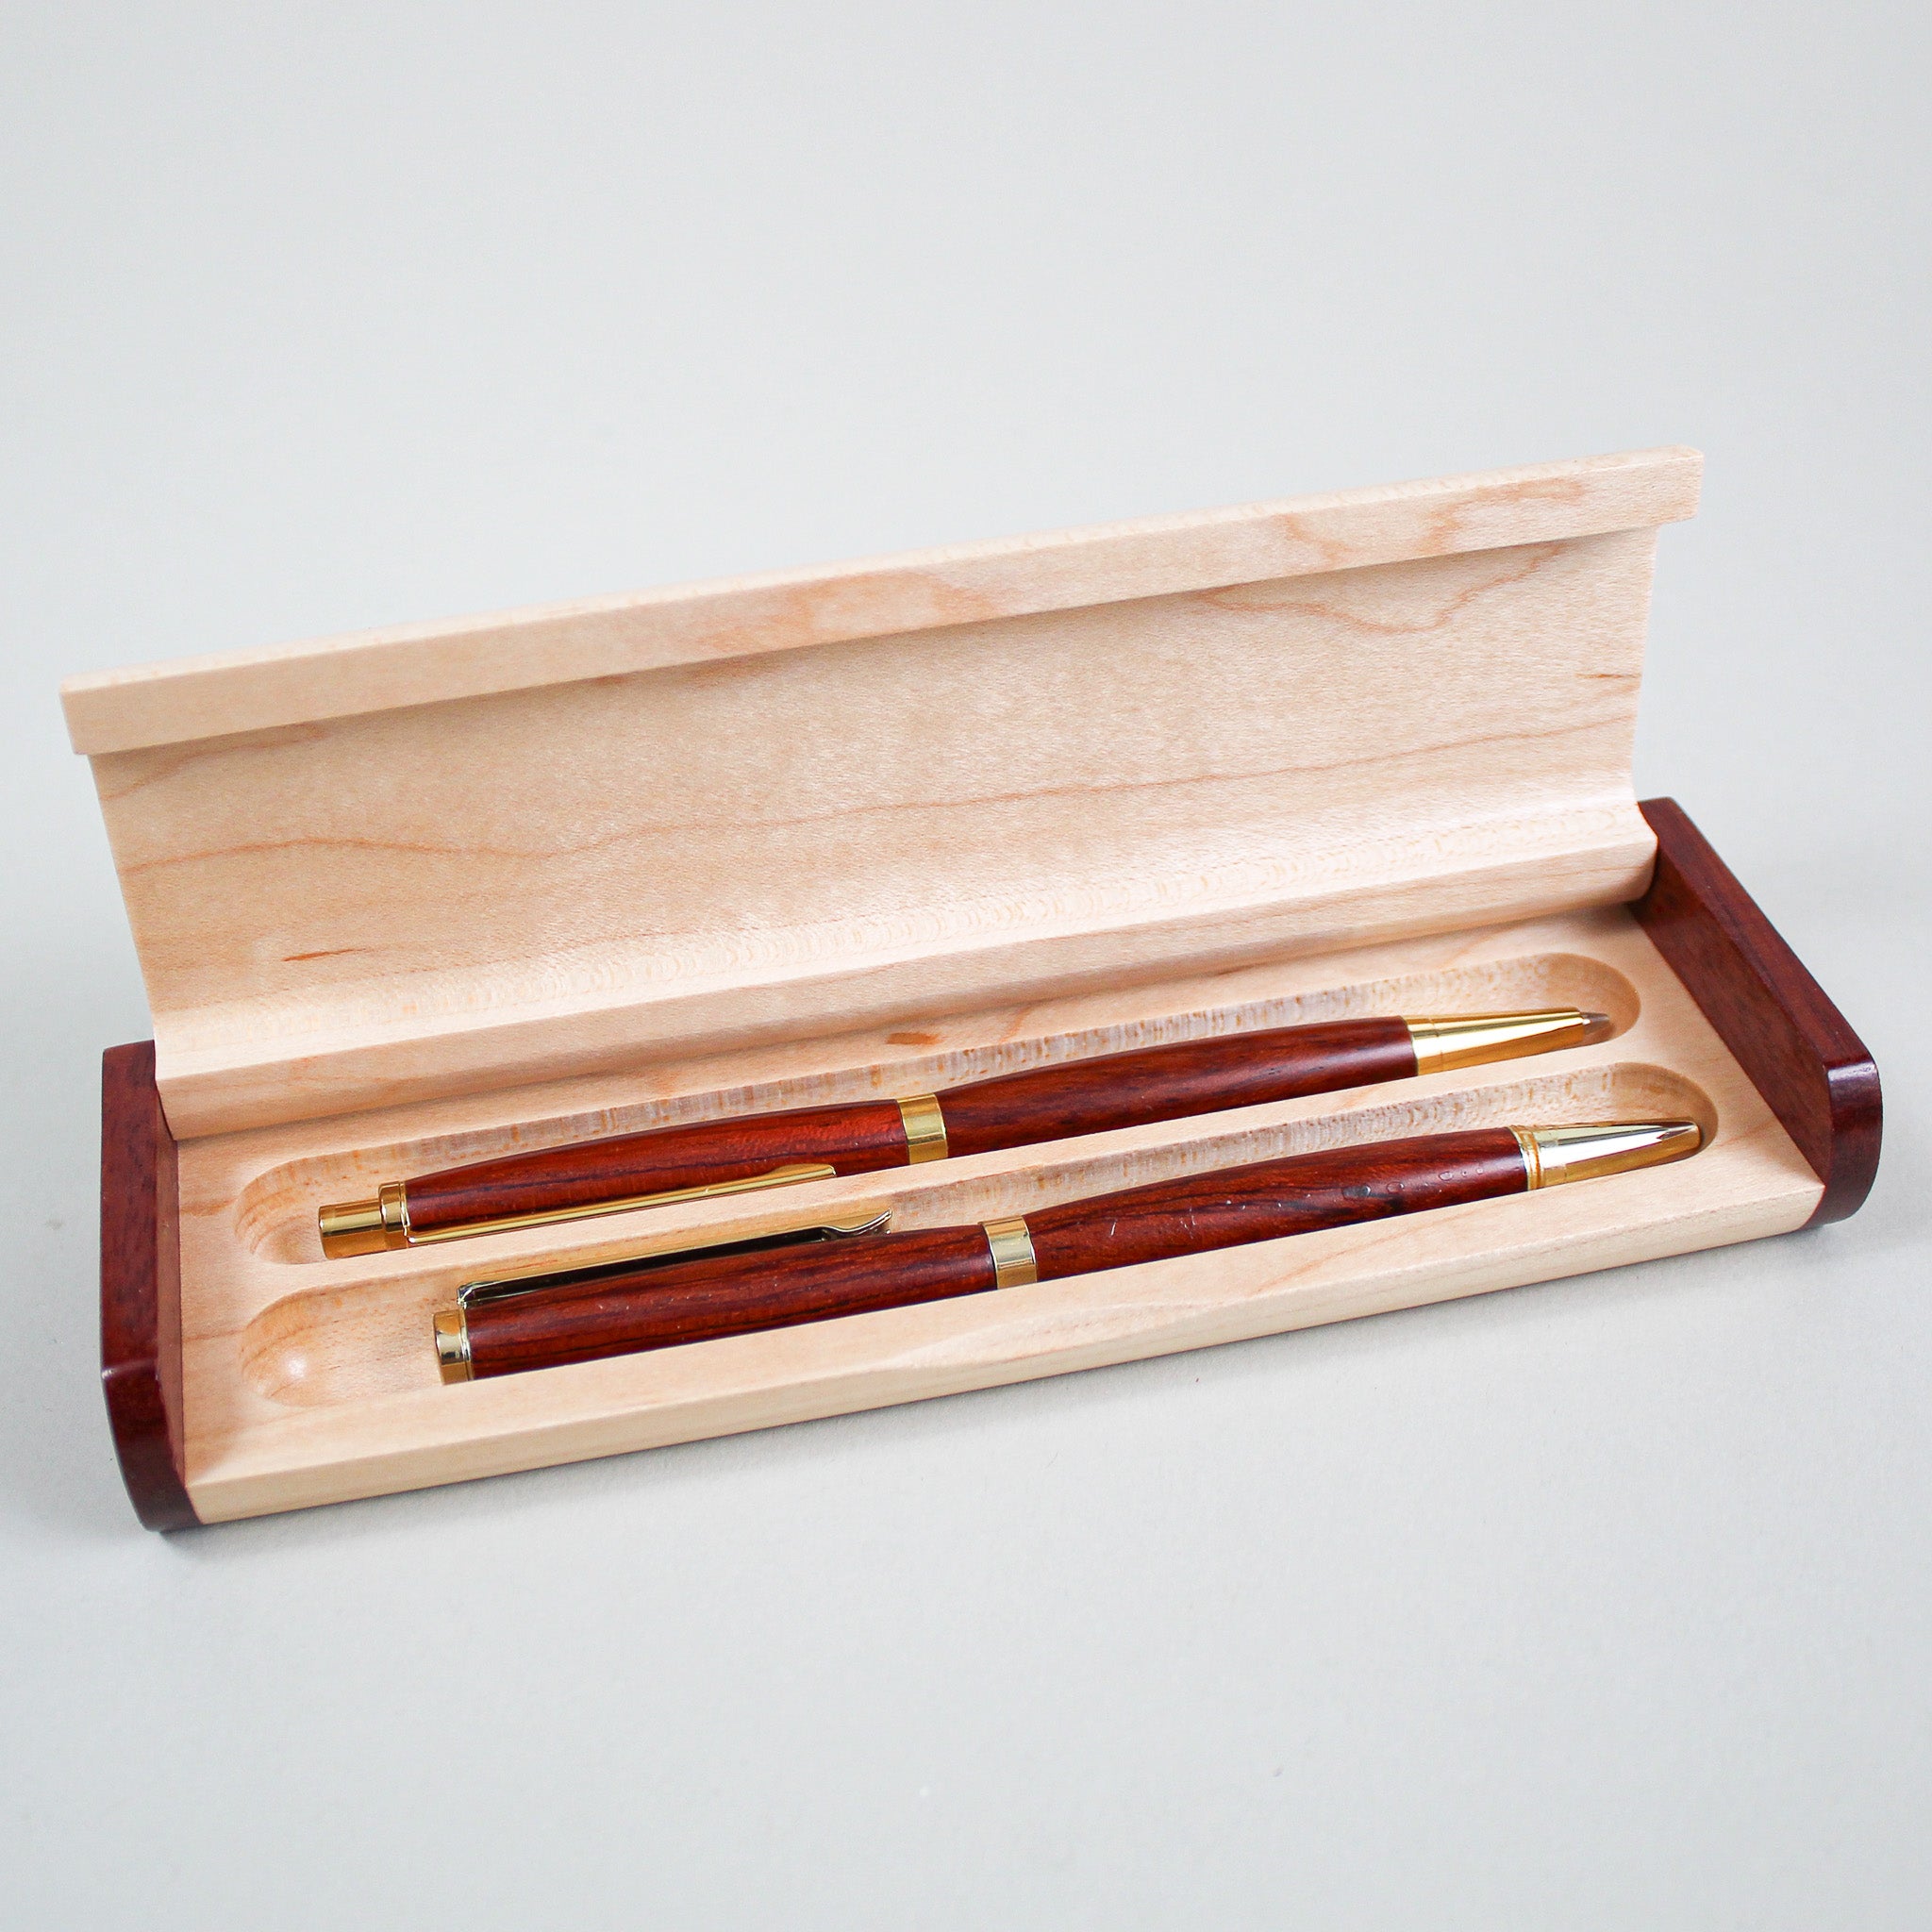 Flat Pen Box with Wood Pen & Pencil Set